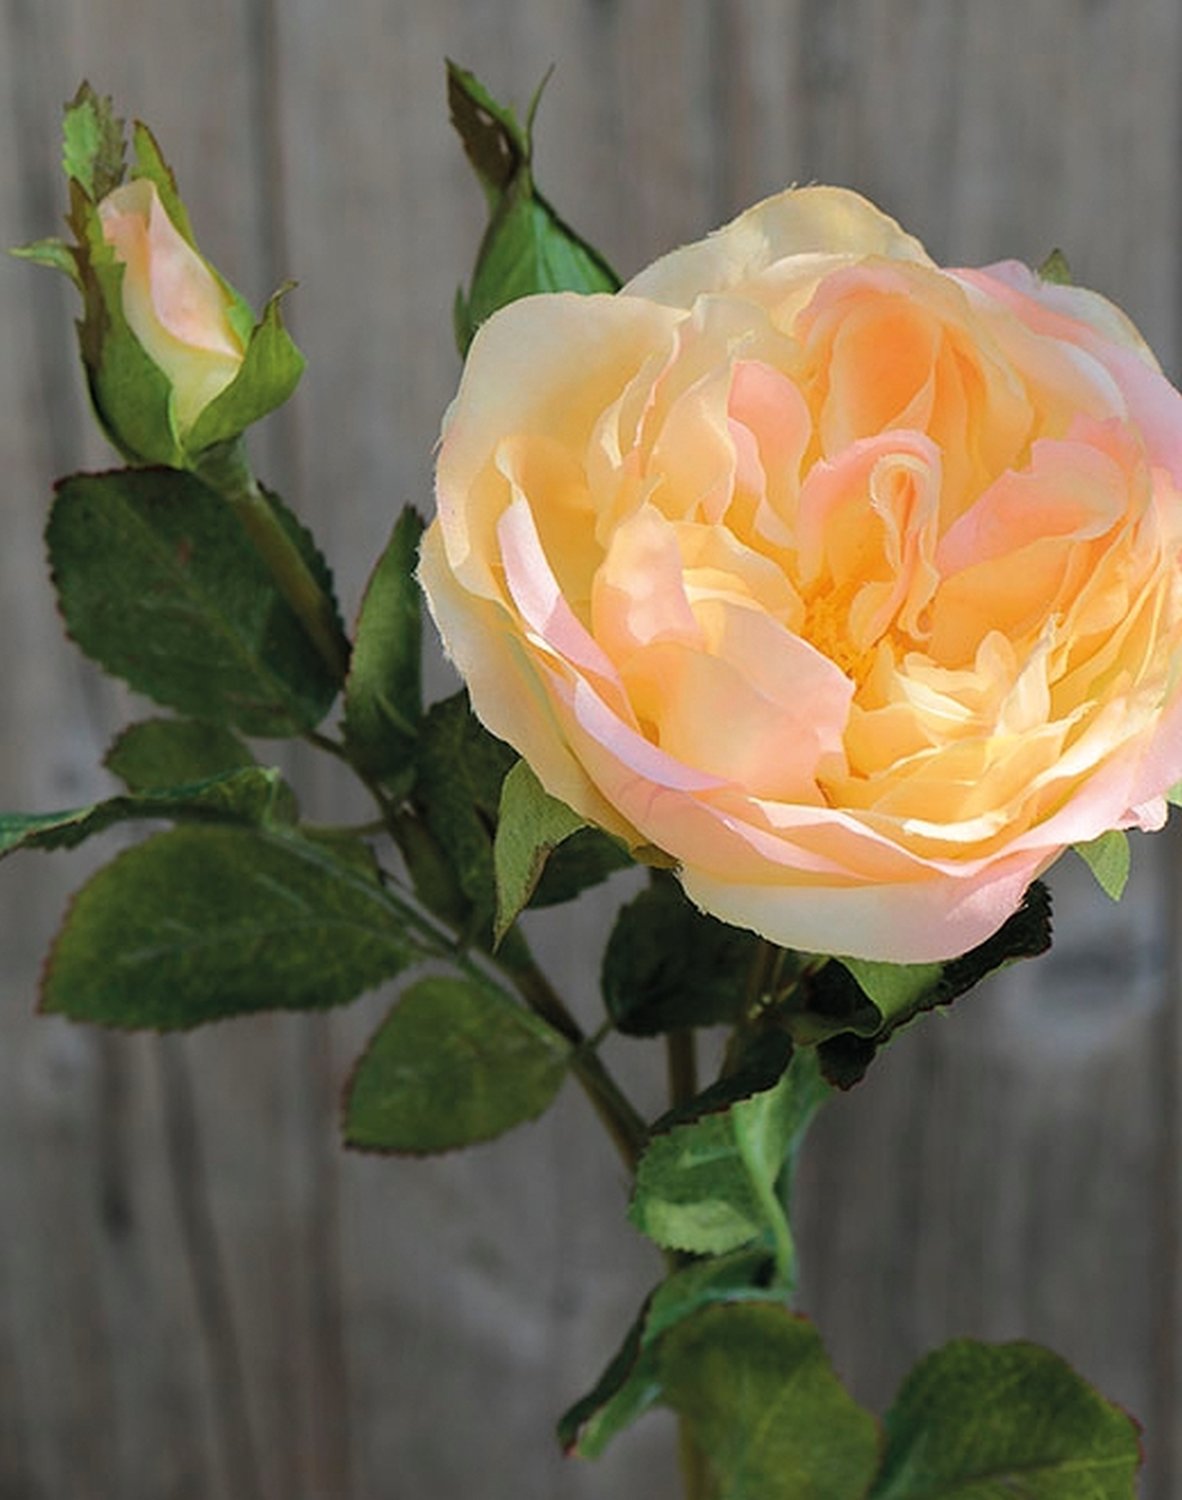 False rose, 1 flower, 2 buds, 30 cm, apricot